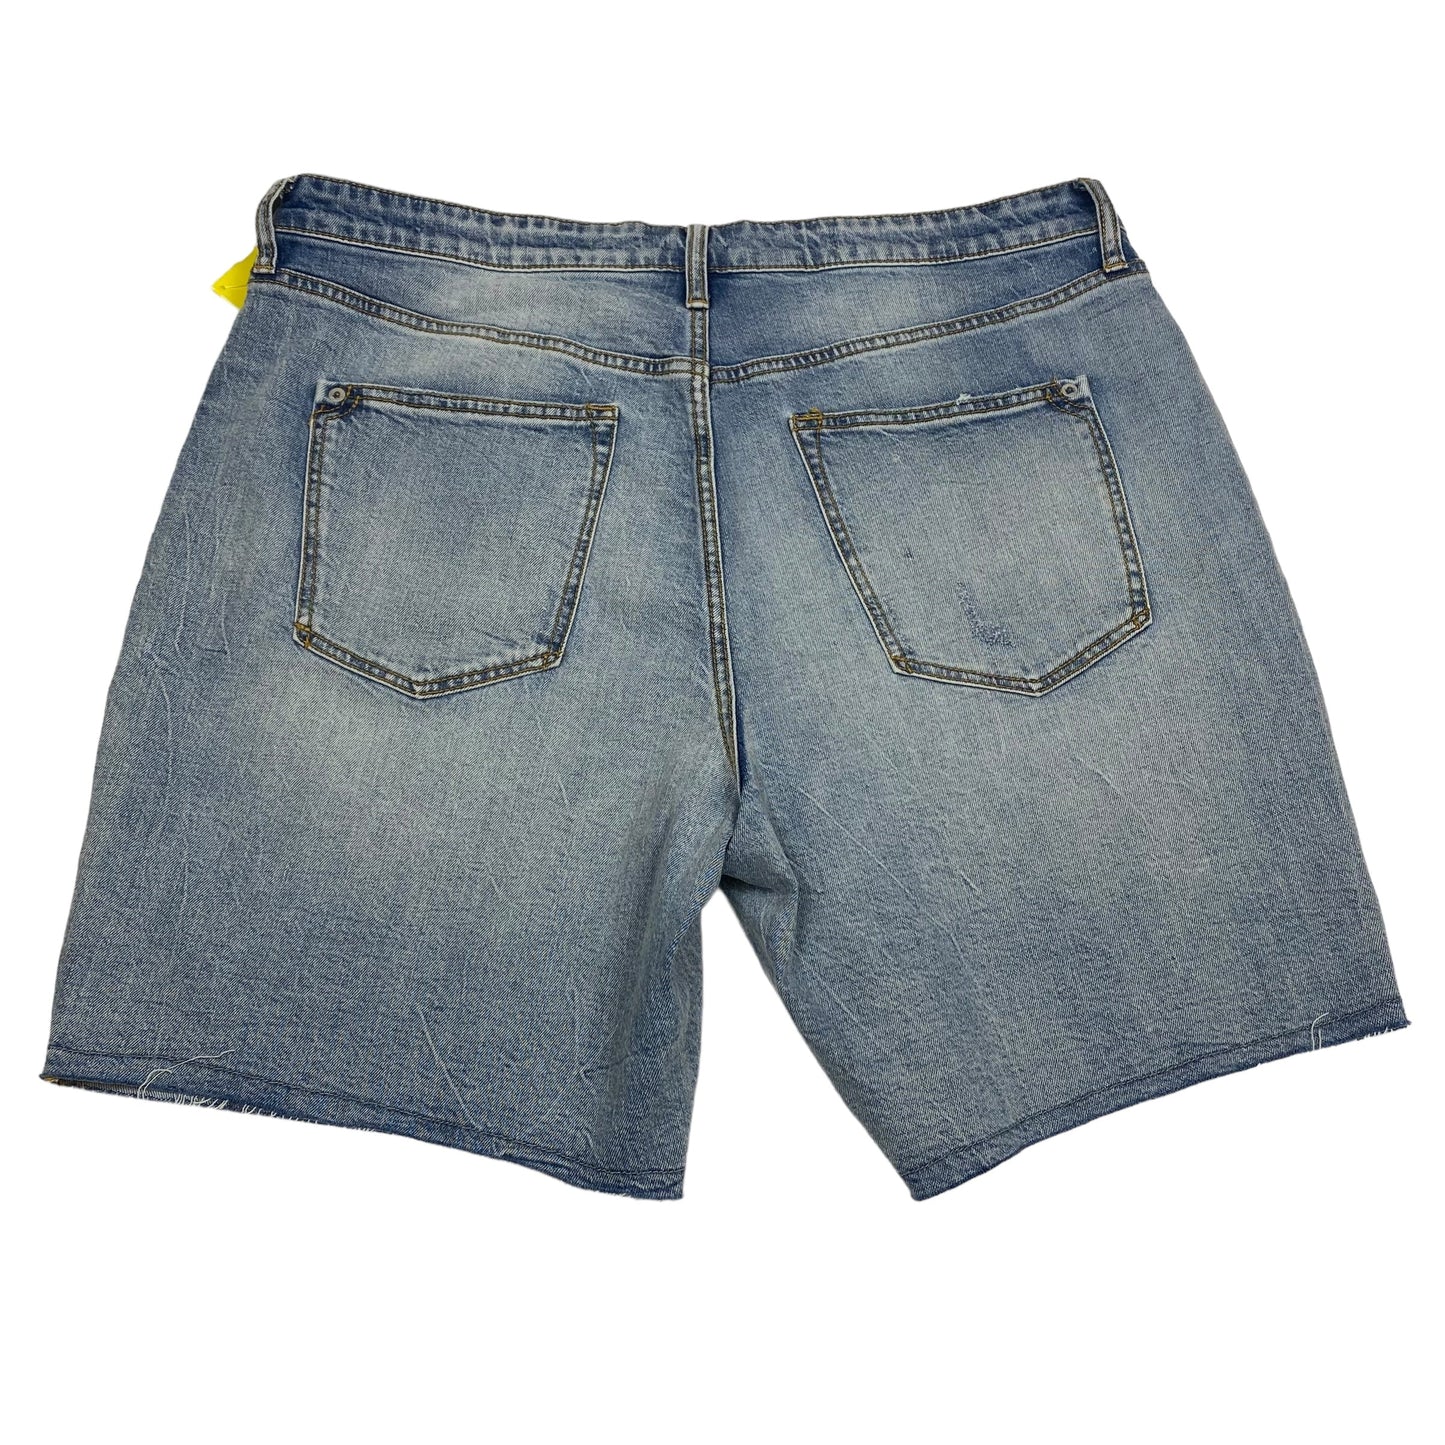 Blue Denim Shorts Pilcro, Size 16w